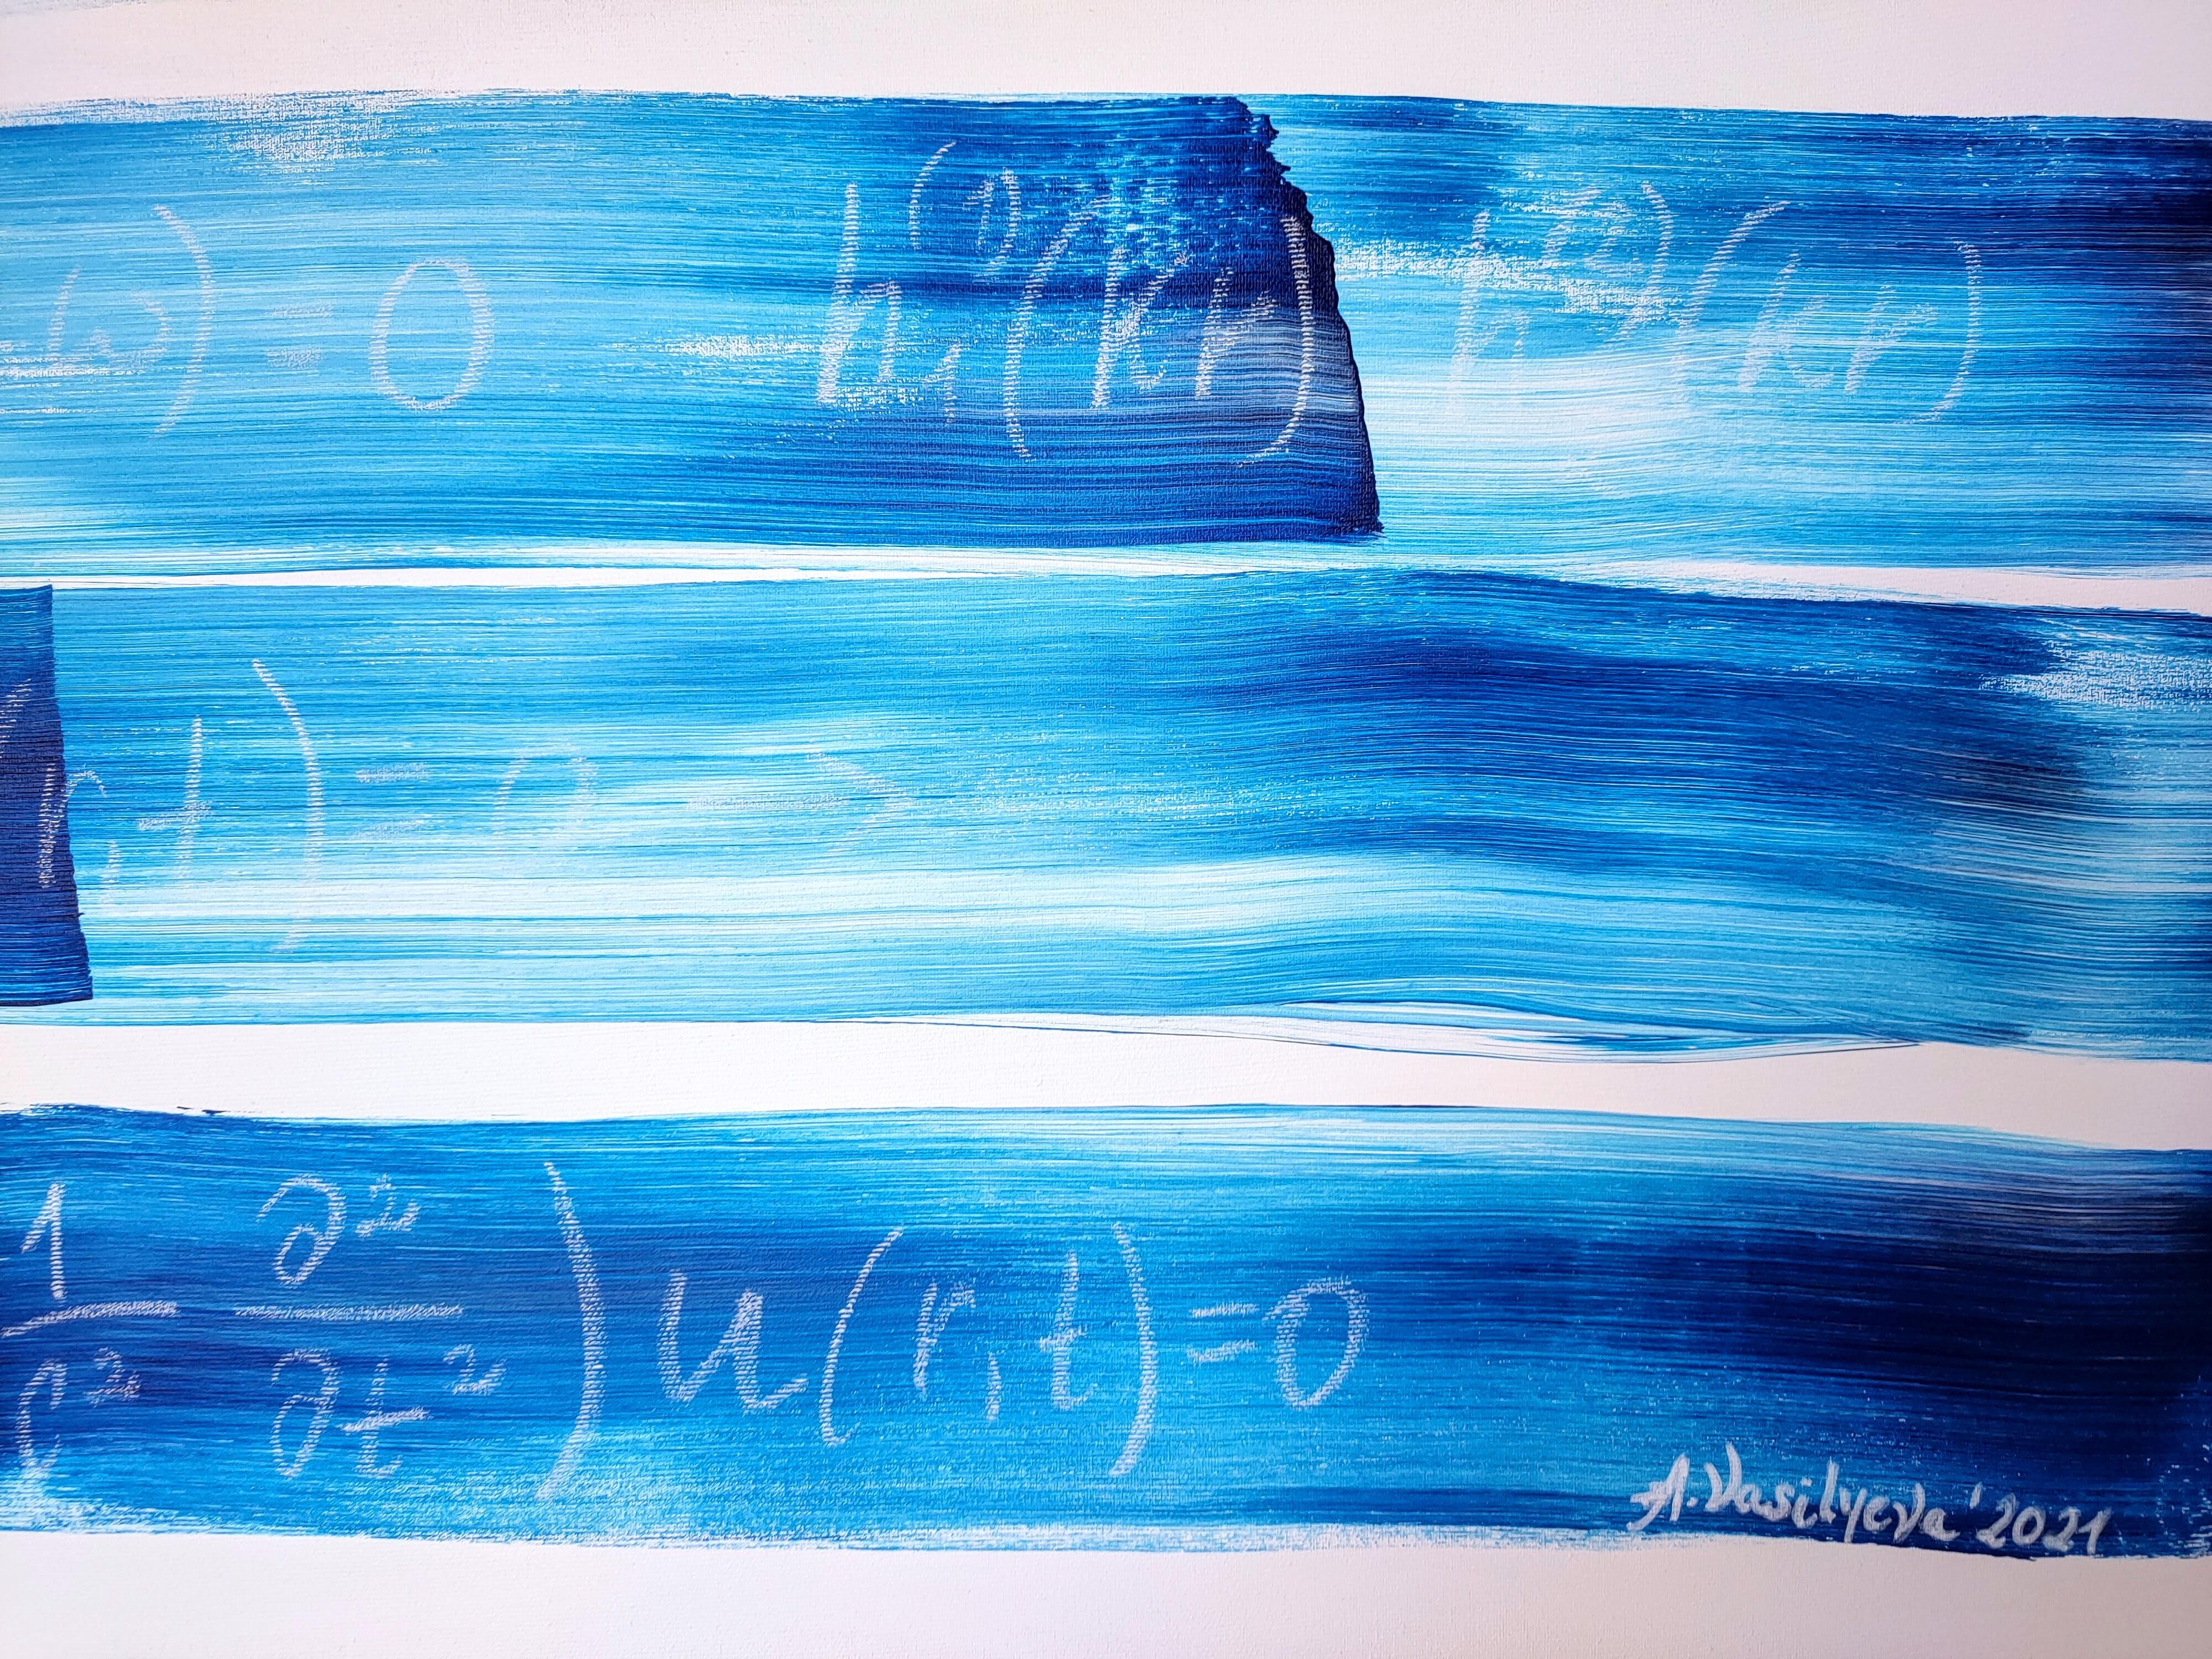 Wave Theory, Science Art Collection - Conceptual Mixed Media Art by Anastasia Vasilyeva